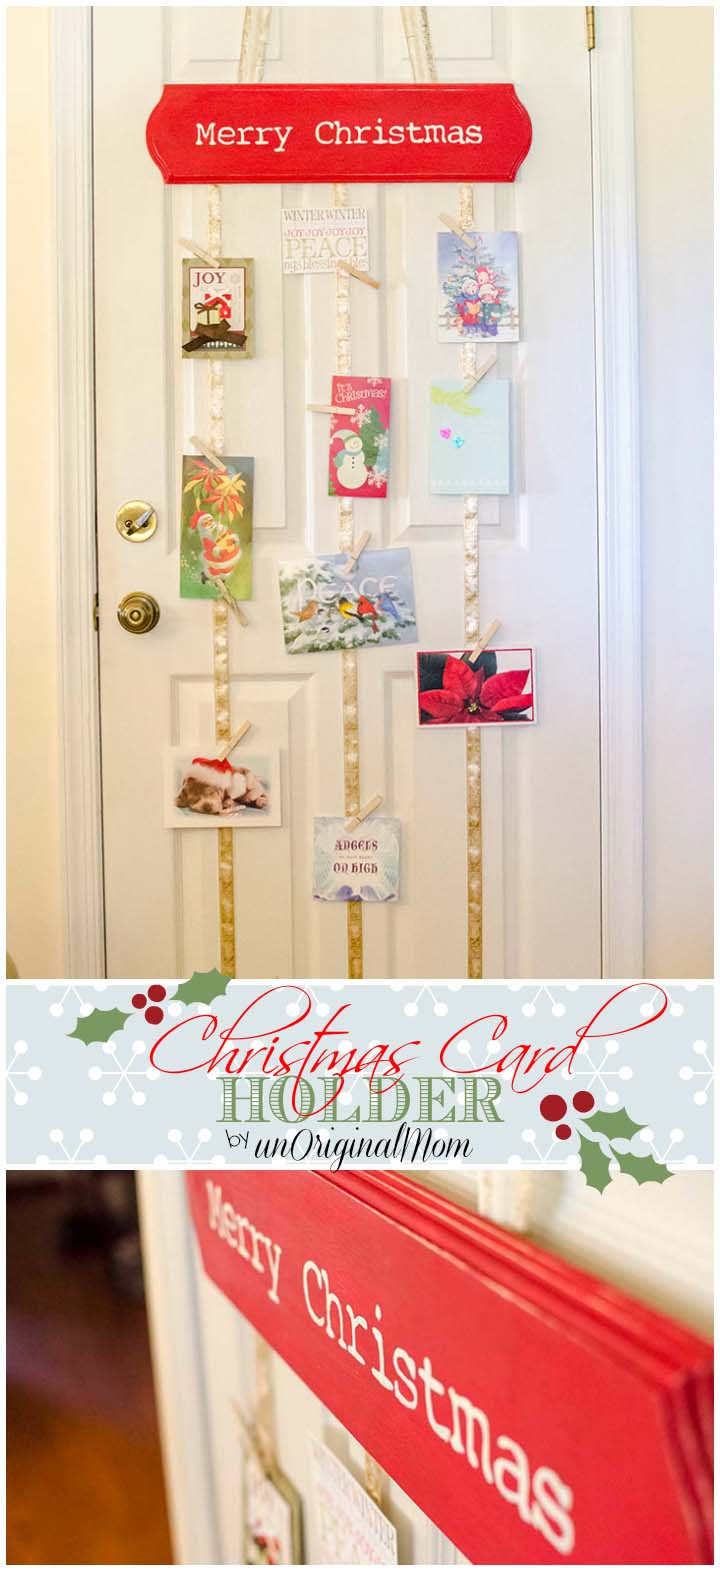 Christmas Card Holder DIY
 DIY Hanging Christmas Card Holder unOriginal Mom